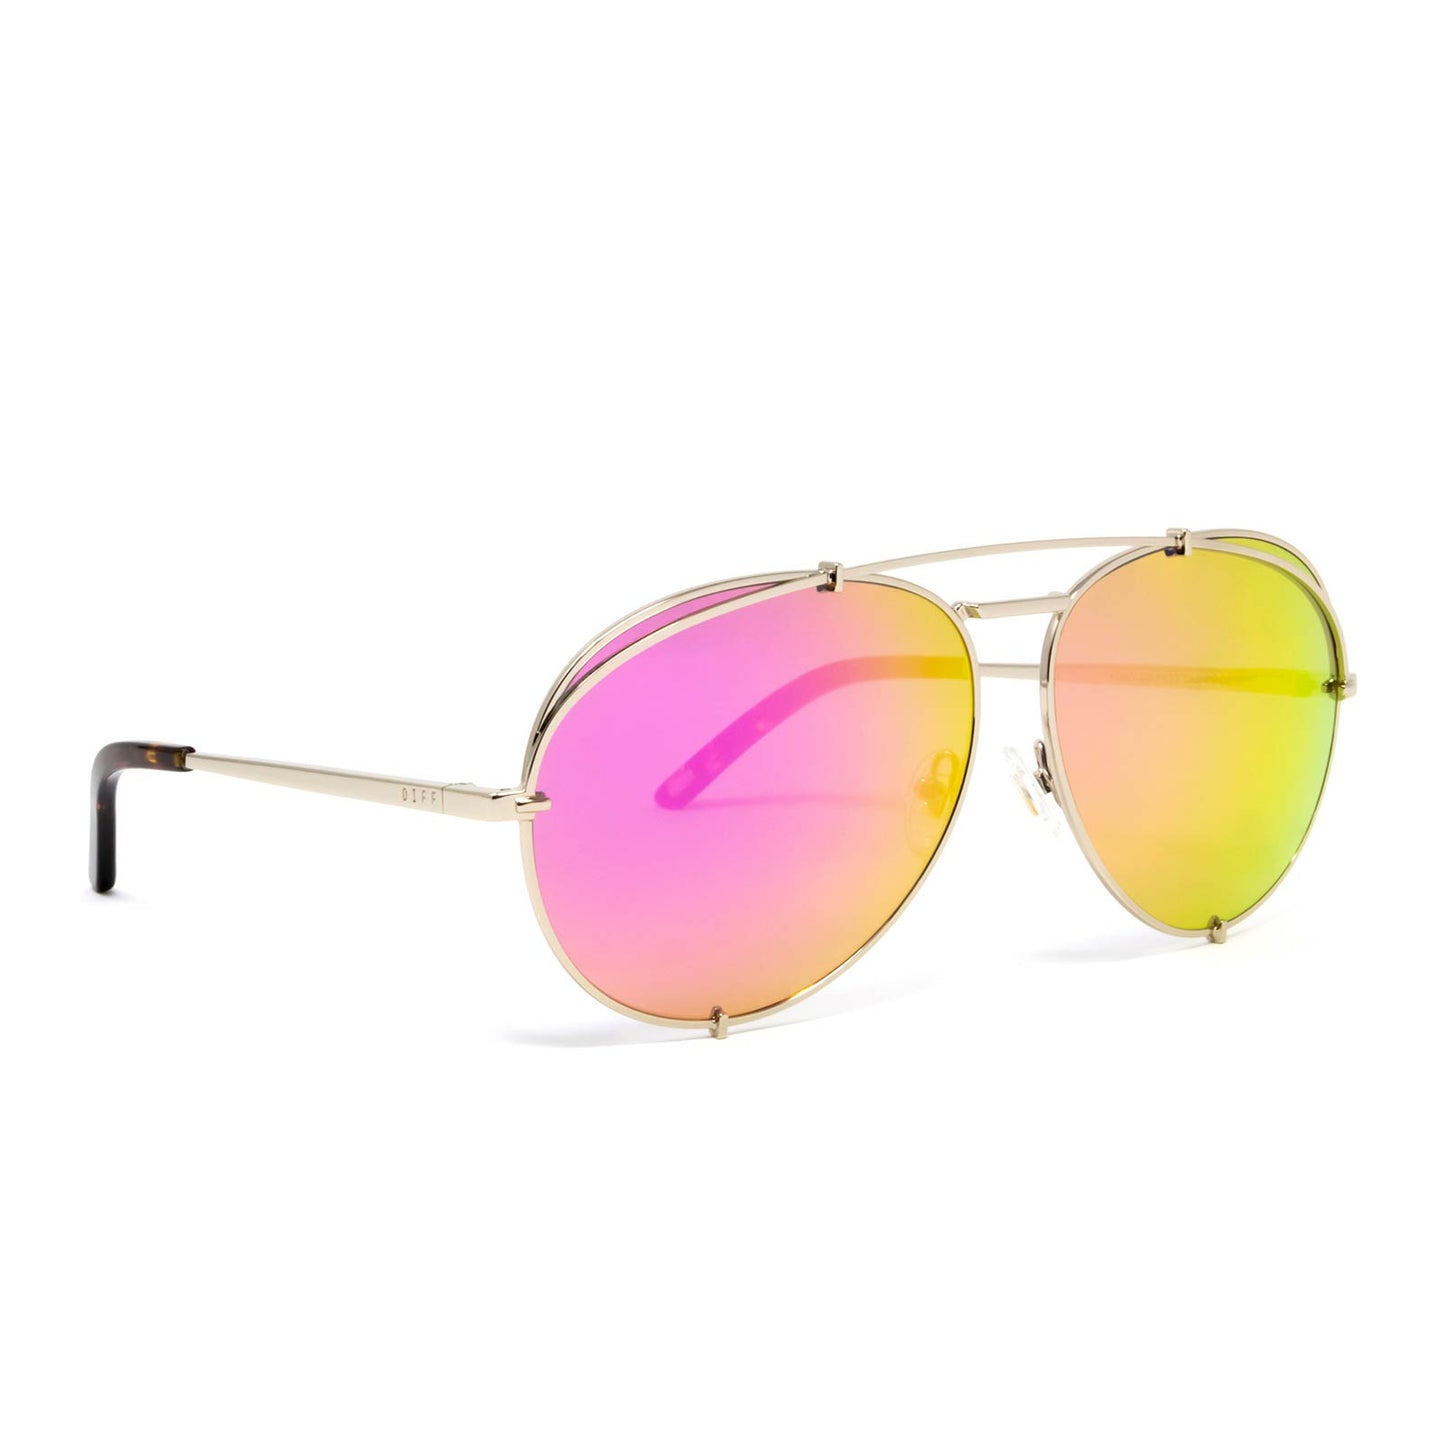 Koko Gold + Pink Sunglasses